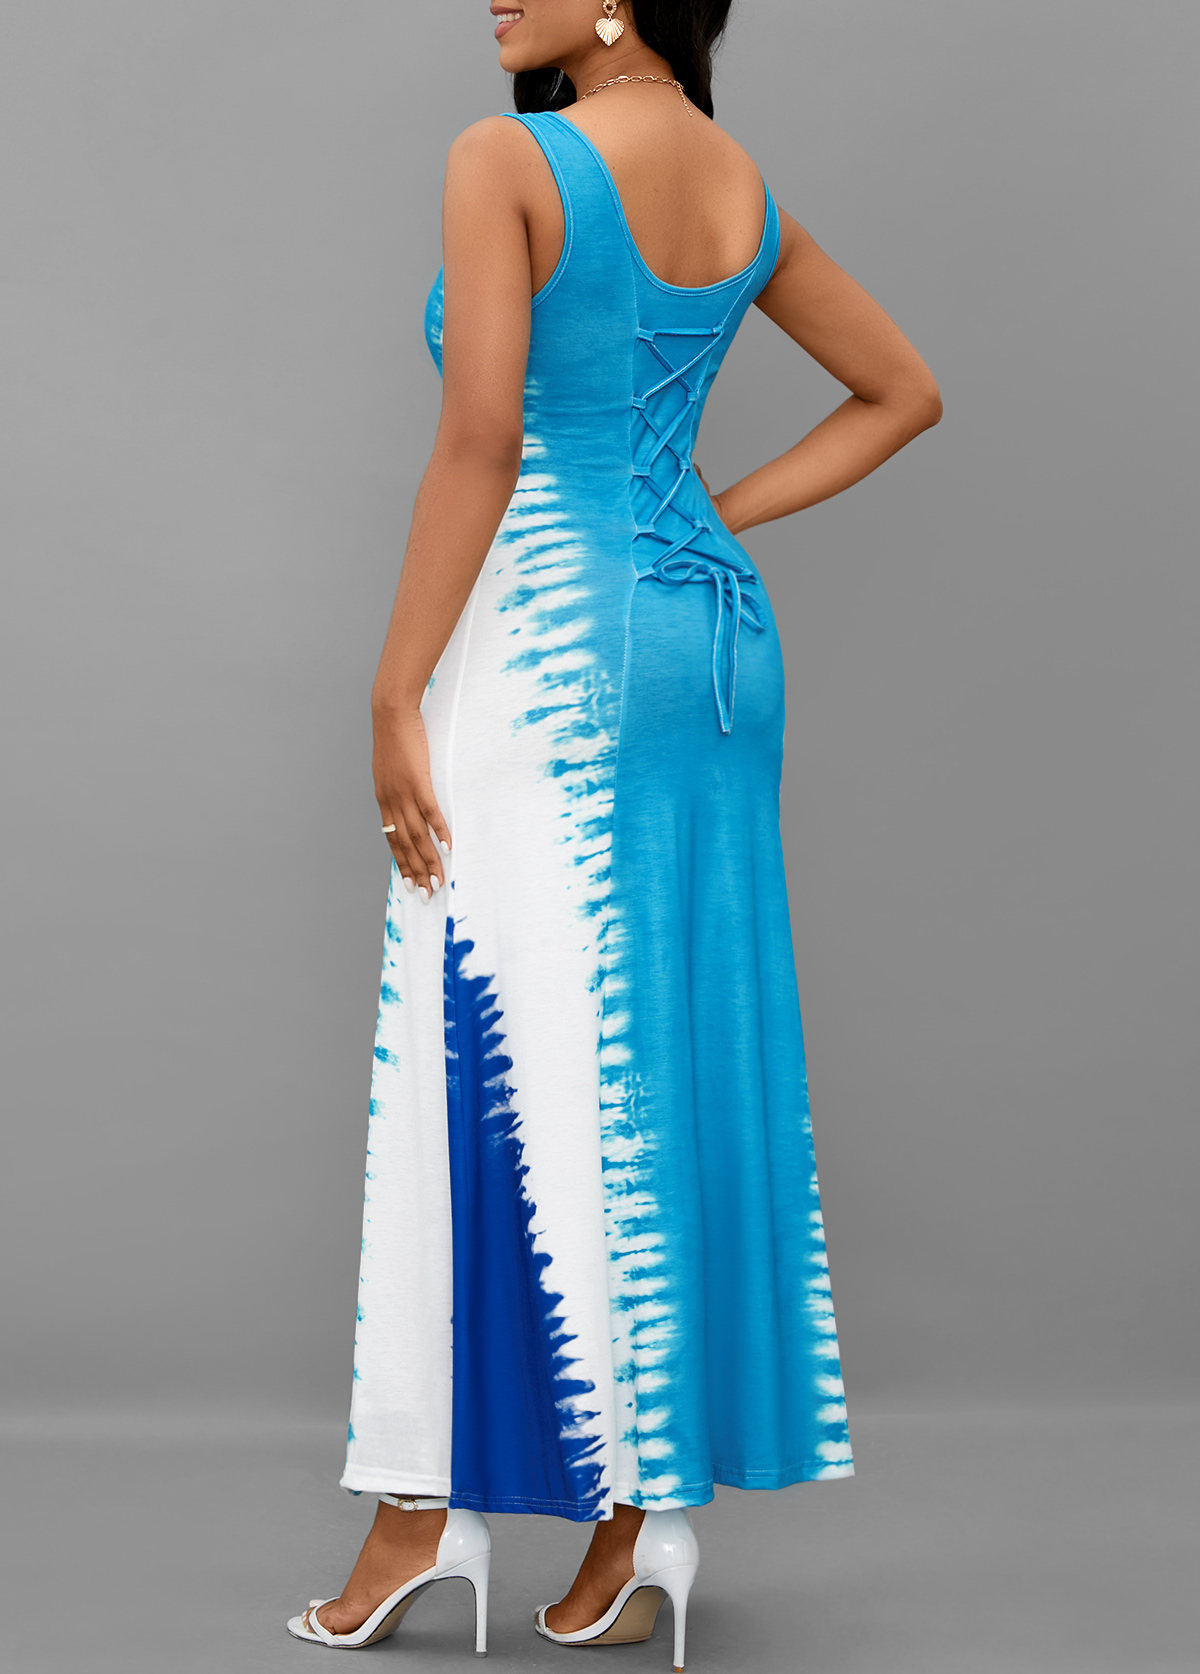 ROTITA Lace Up Tie Dye Print Light Blue Maxi Dress